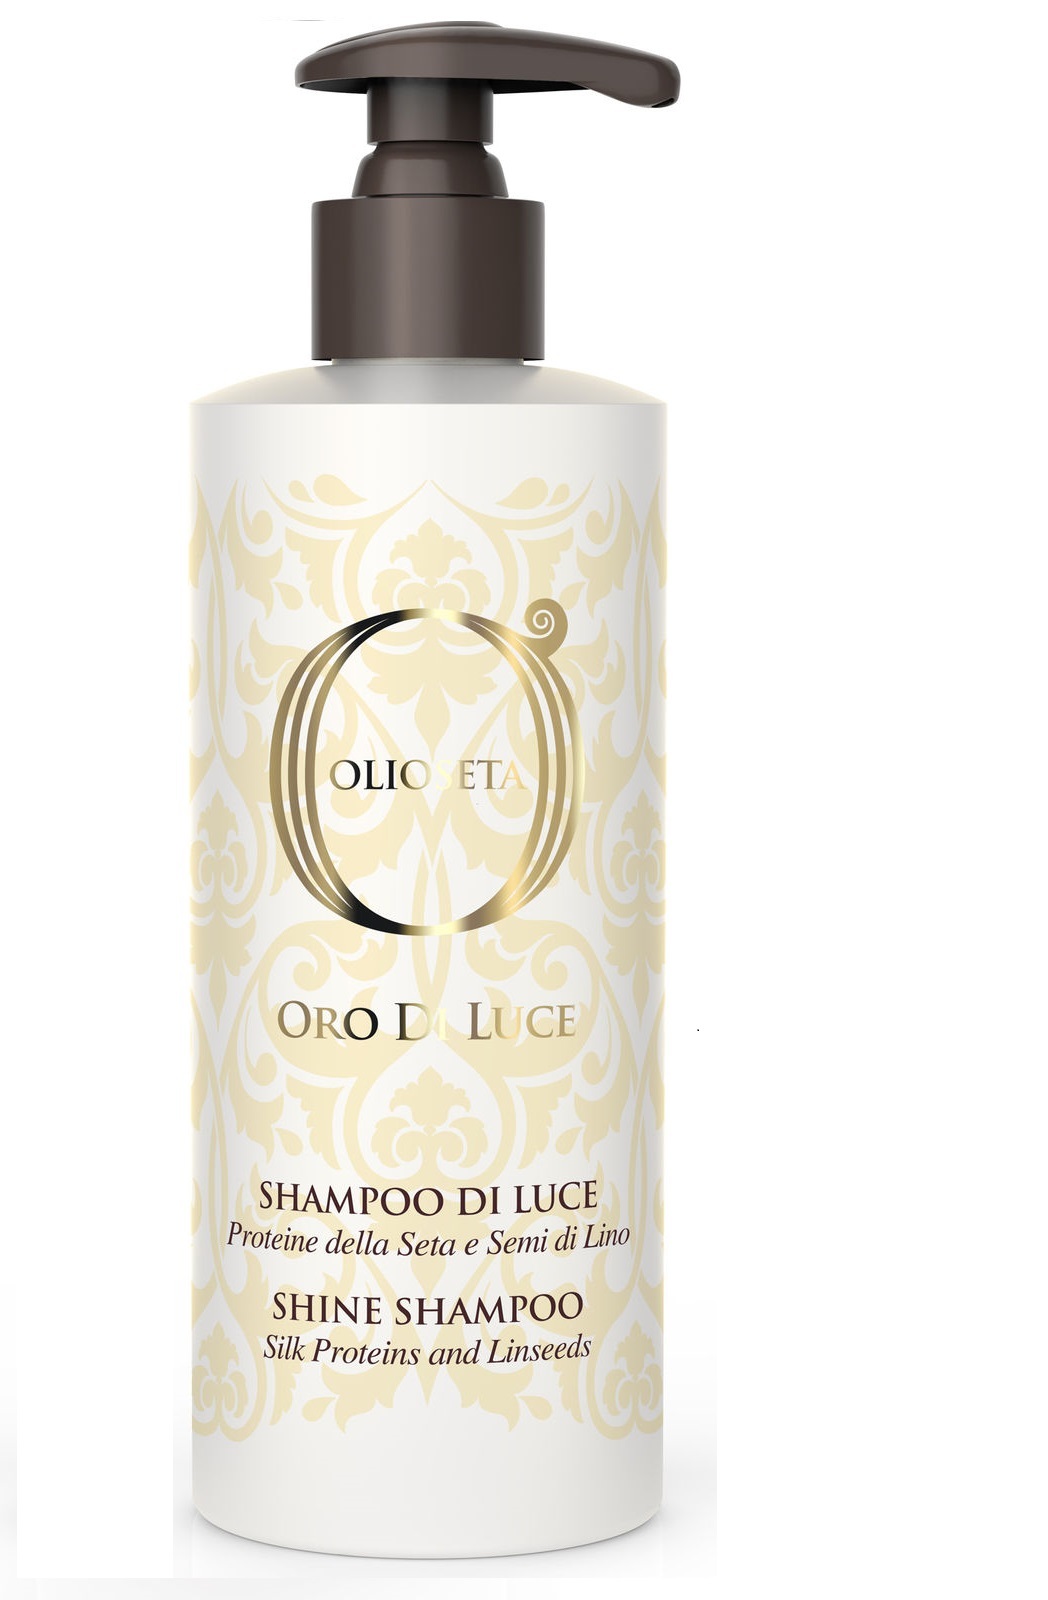 Olioseta Oro di Luce Organic Shine Shampoo 250 ml by Barex Italiana - $37.99